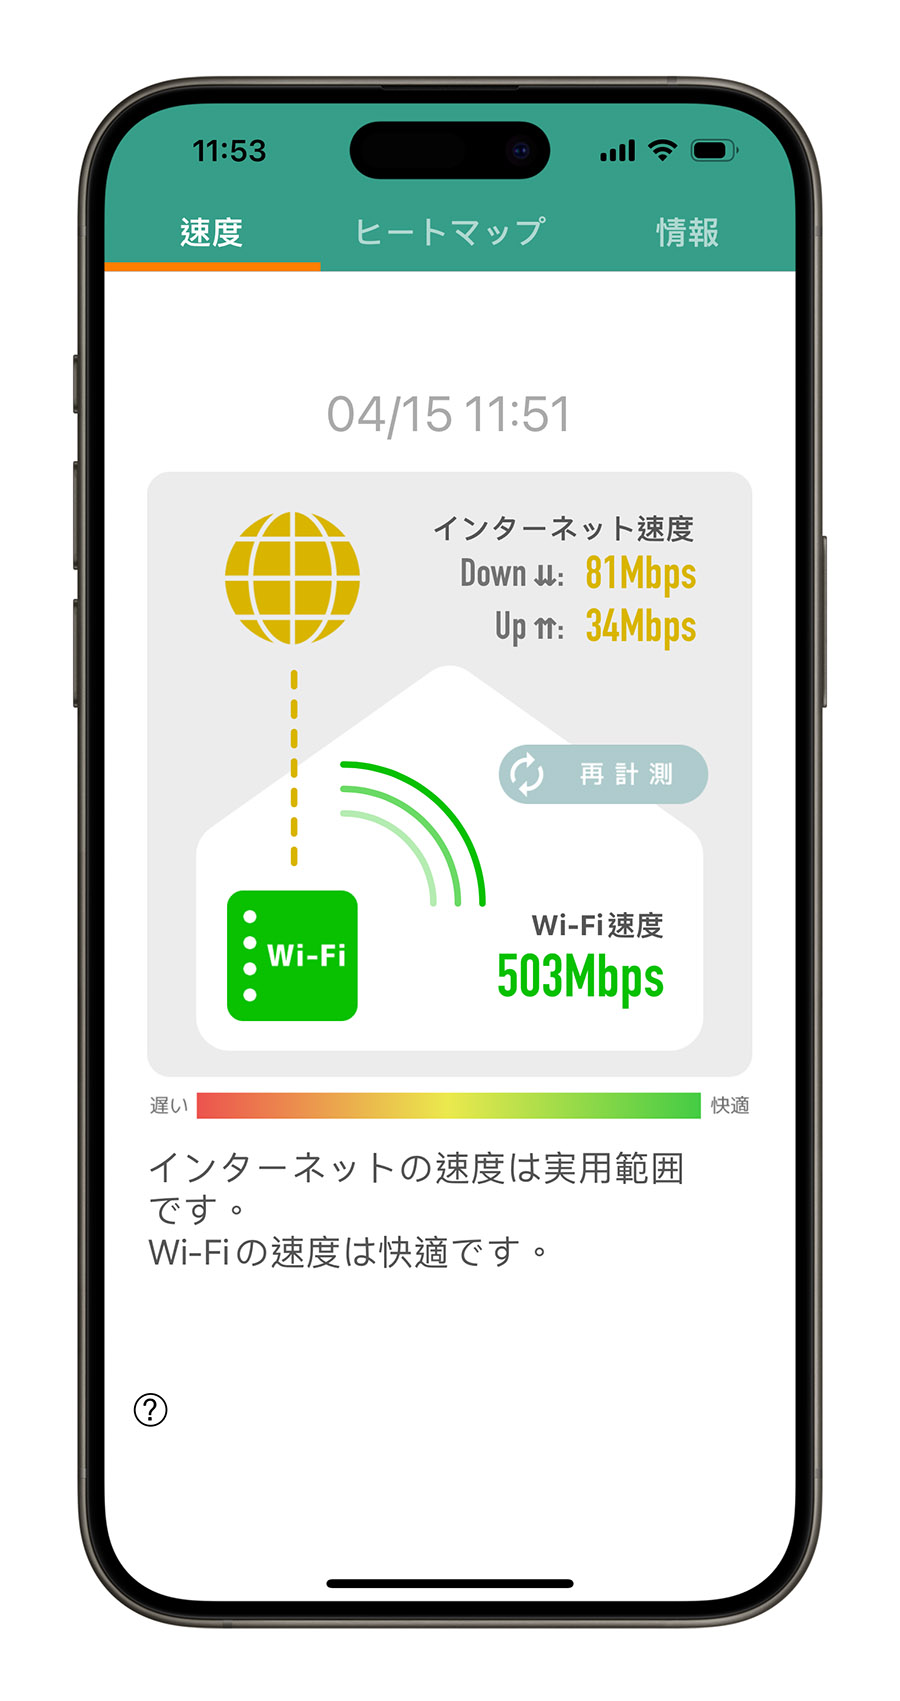 Wi-Fi 地圖 訊號 偵測 強度 App 推薦